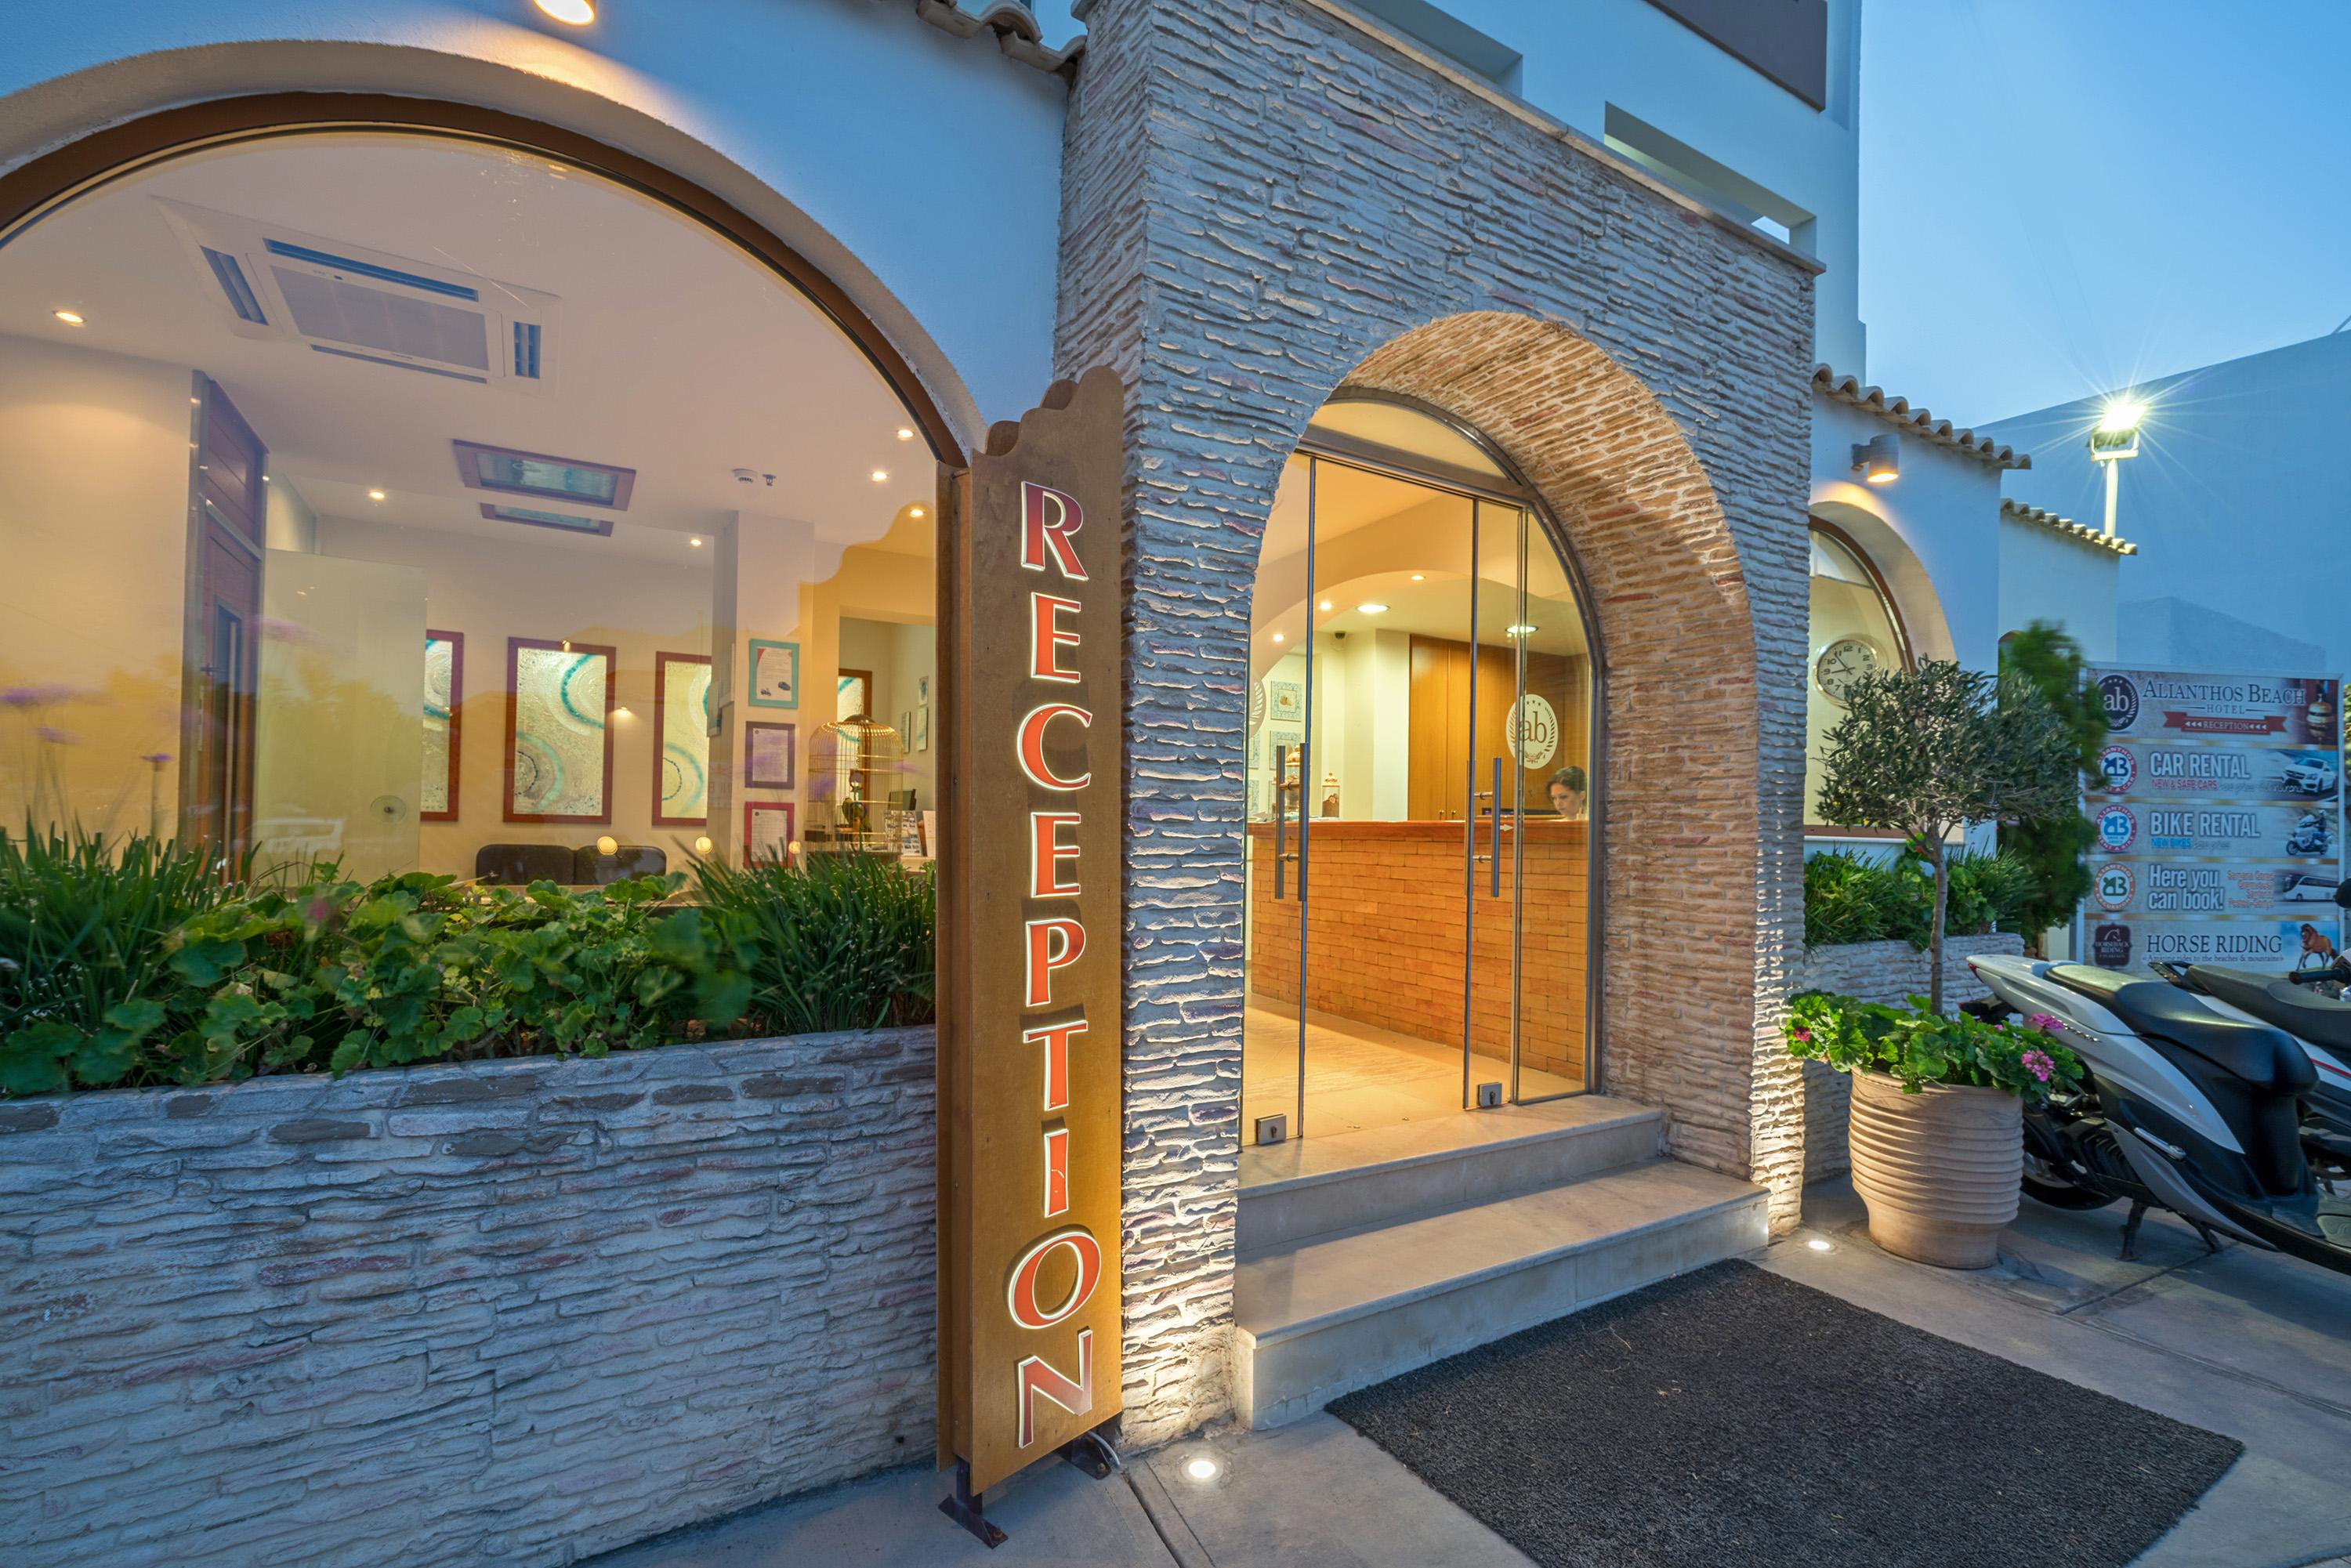 Alianthos Beach Hotel Plakias Exterior photo